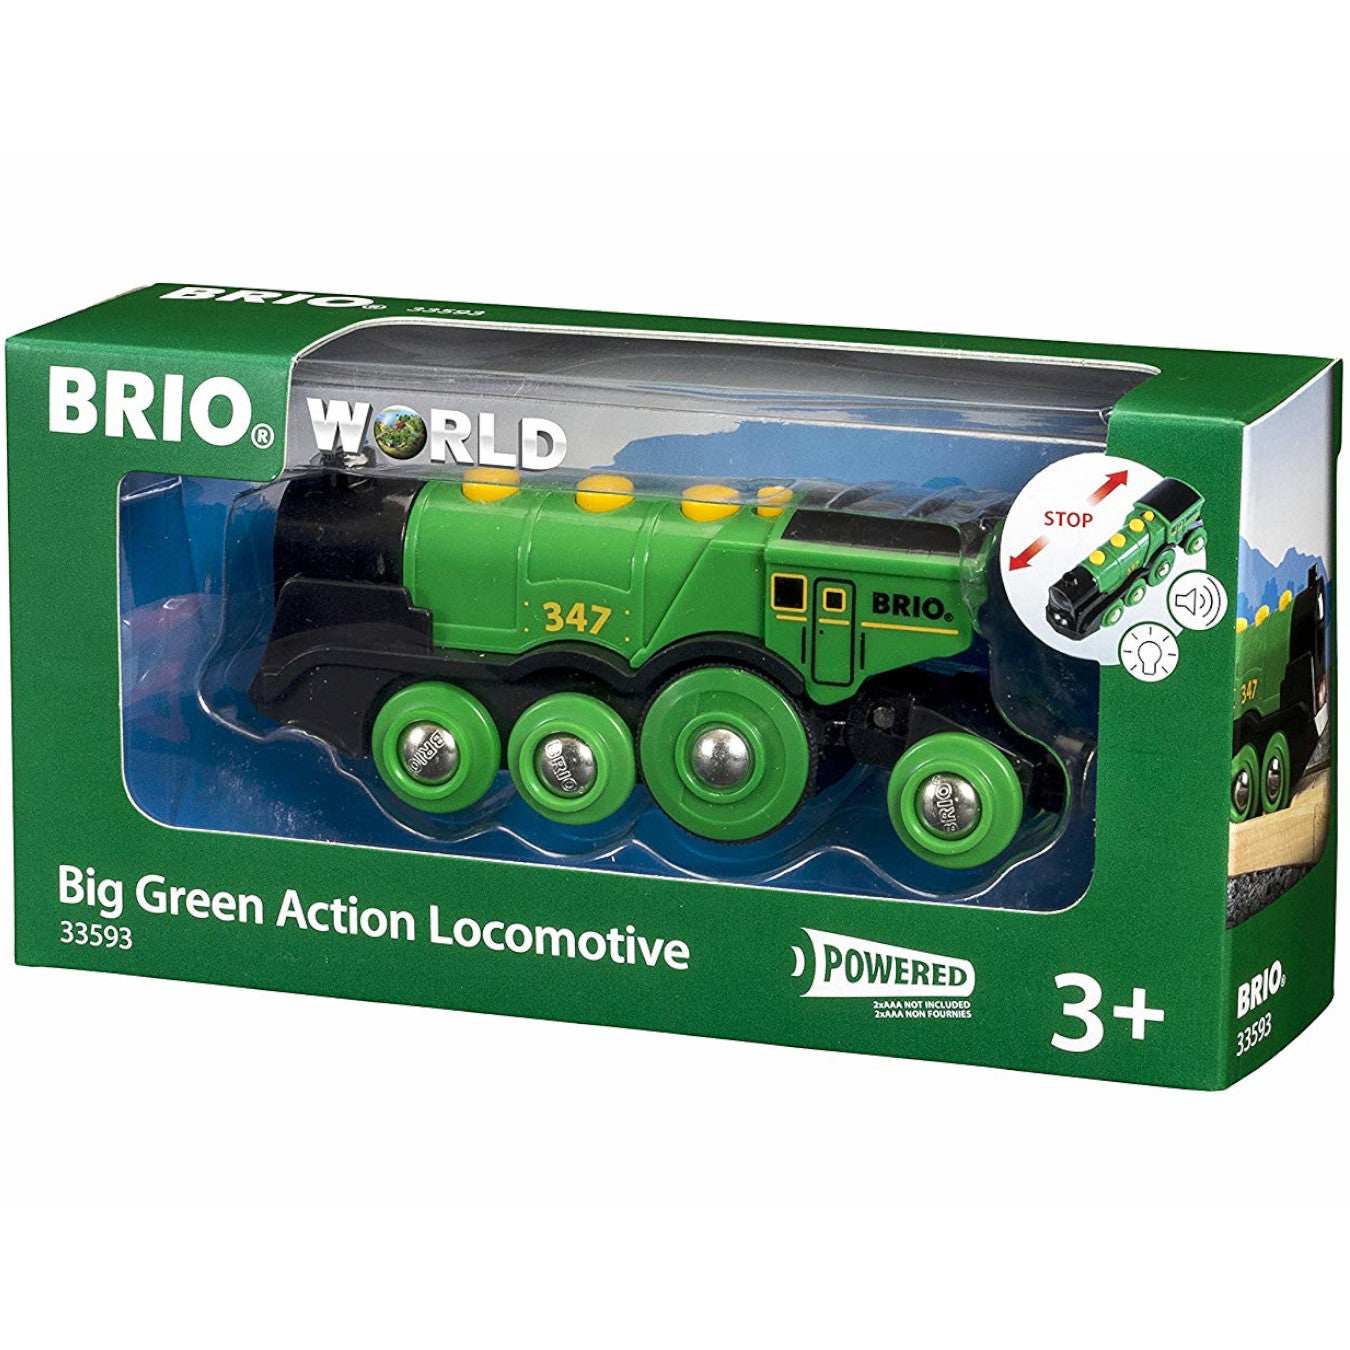 Brio Big Green Action Locomotive Battery Powered